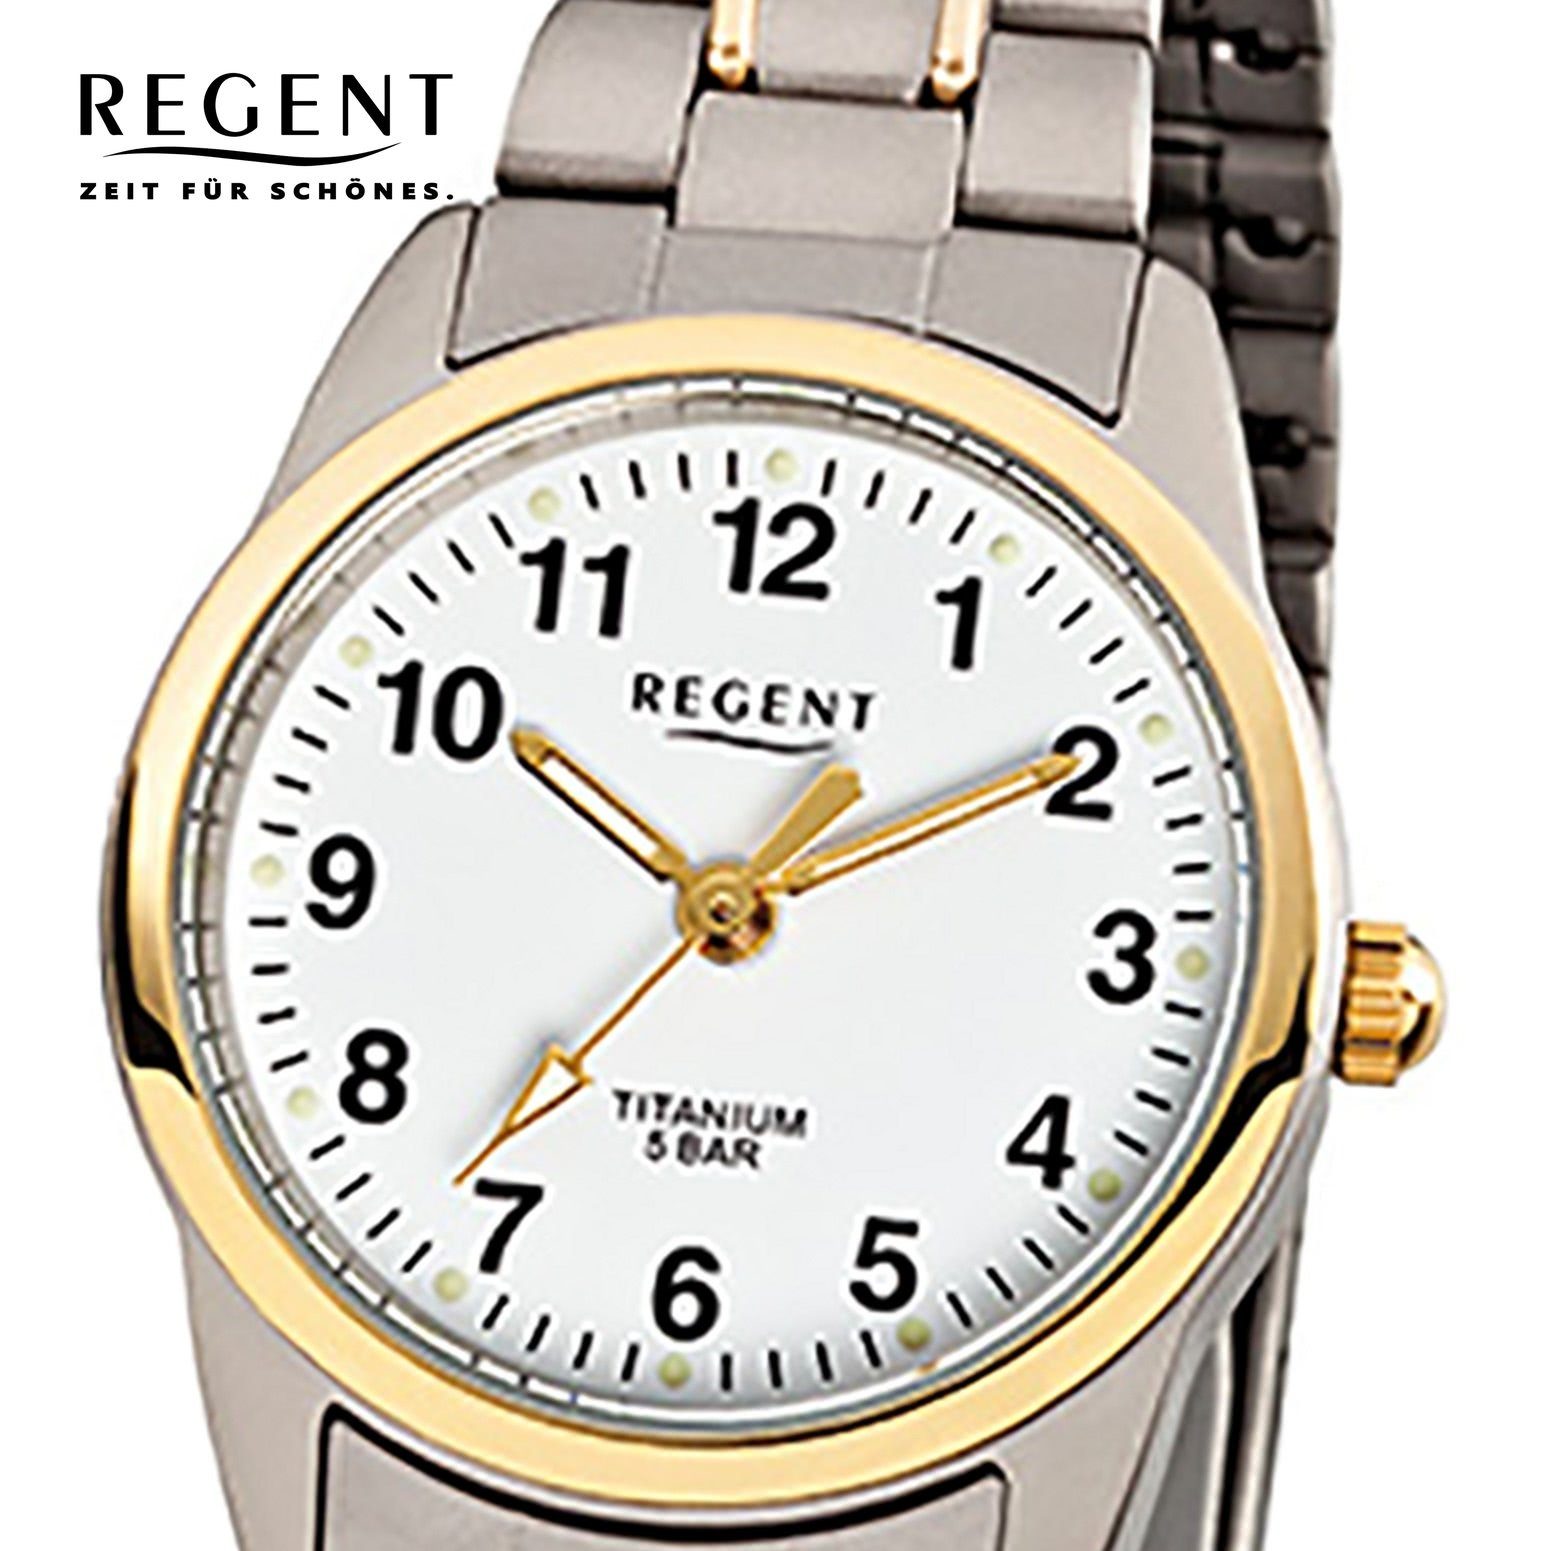 rund, Titanarmband grau gold, Armbanduhr 26mm), Regent klein Quarzuhr Damen Damen-Armbanduhr silber Regent (ca.